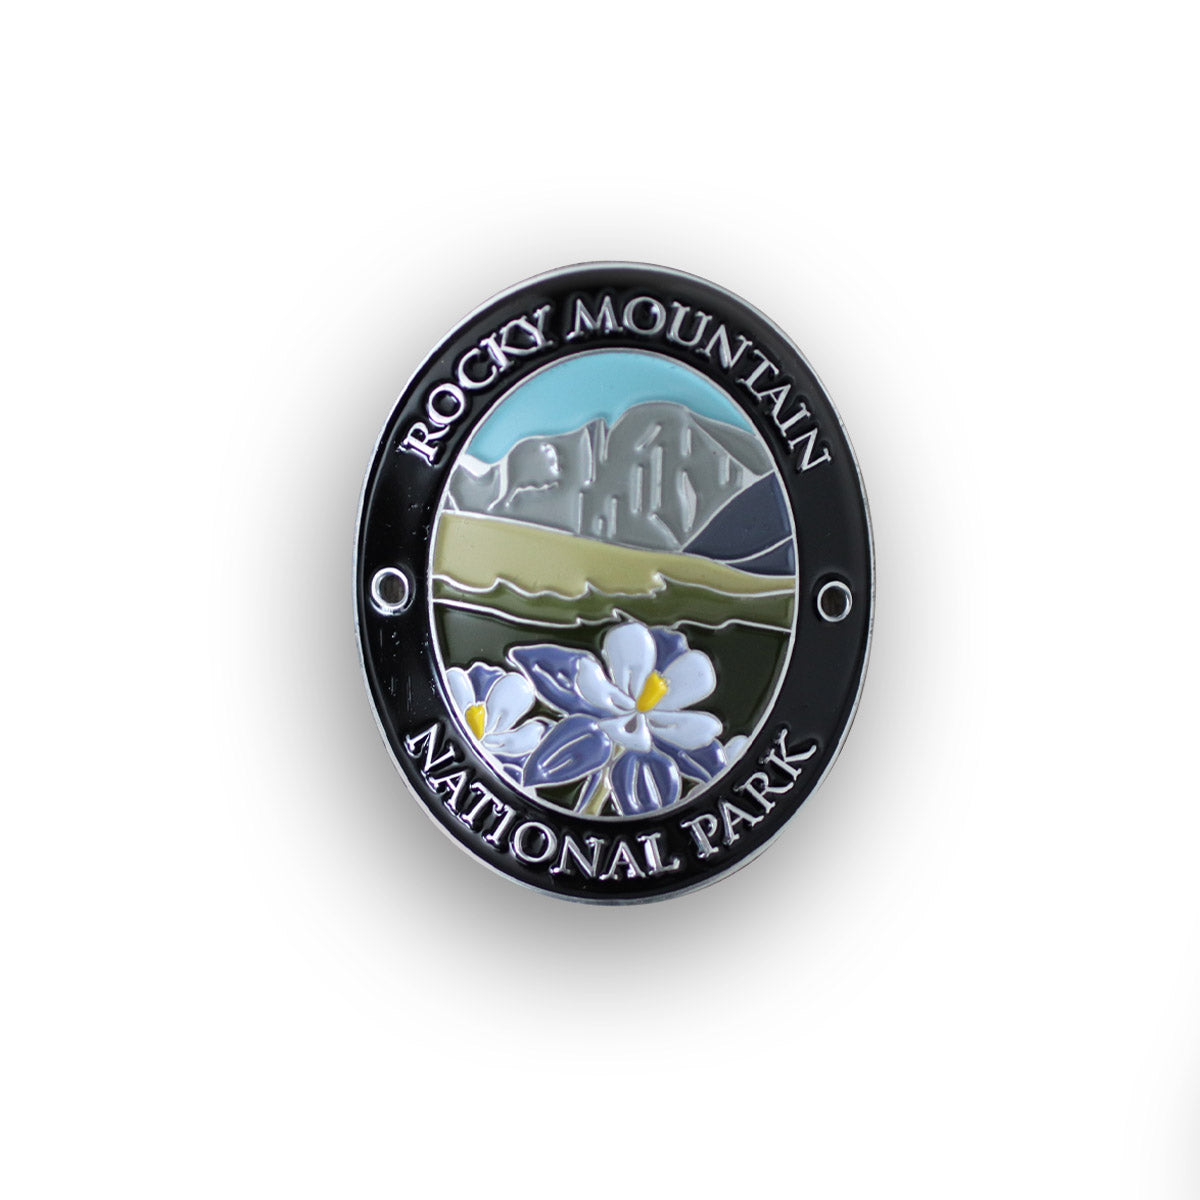 Details about   Scotland Glencoe new badge mount stocknagel hiking medallion G9781 